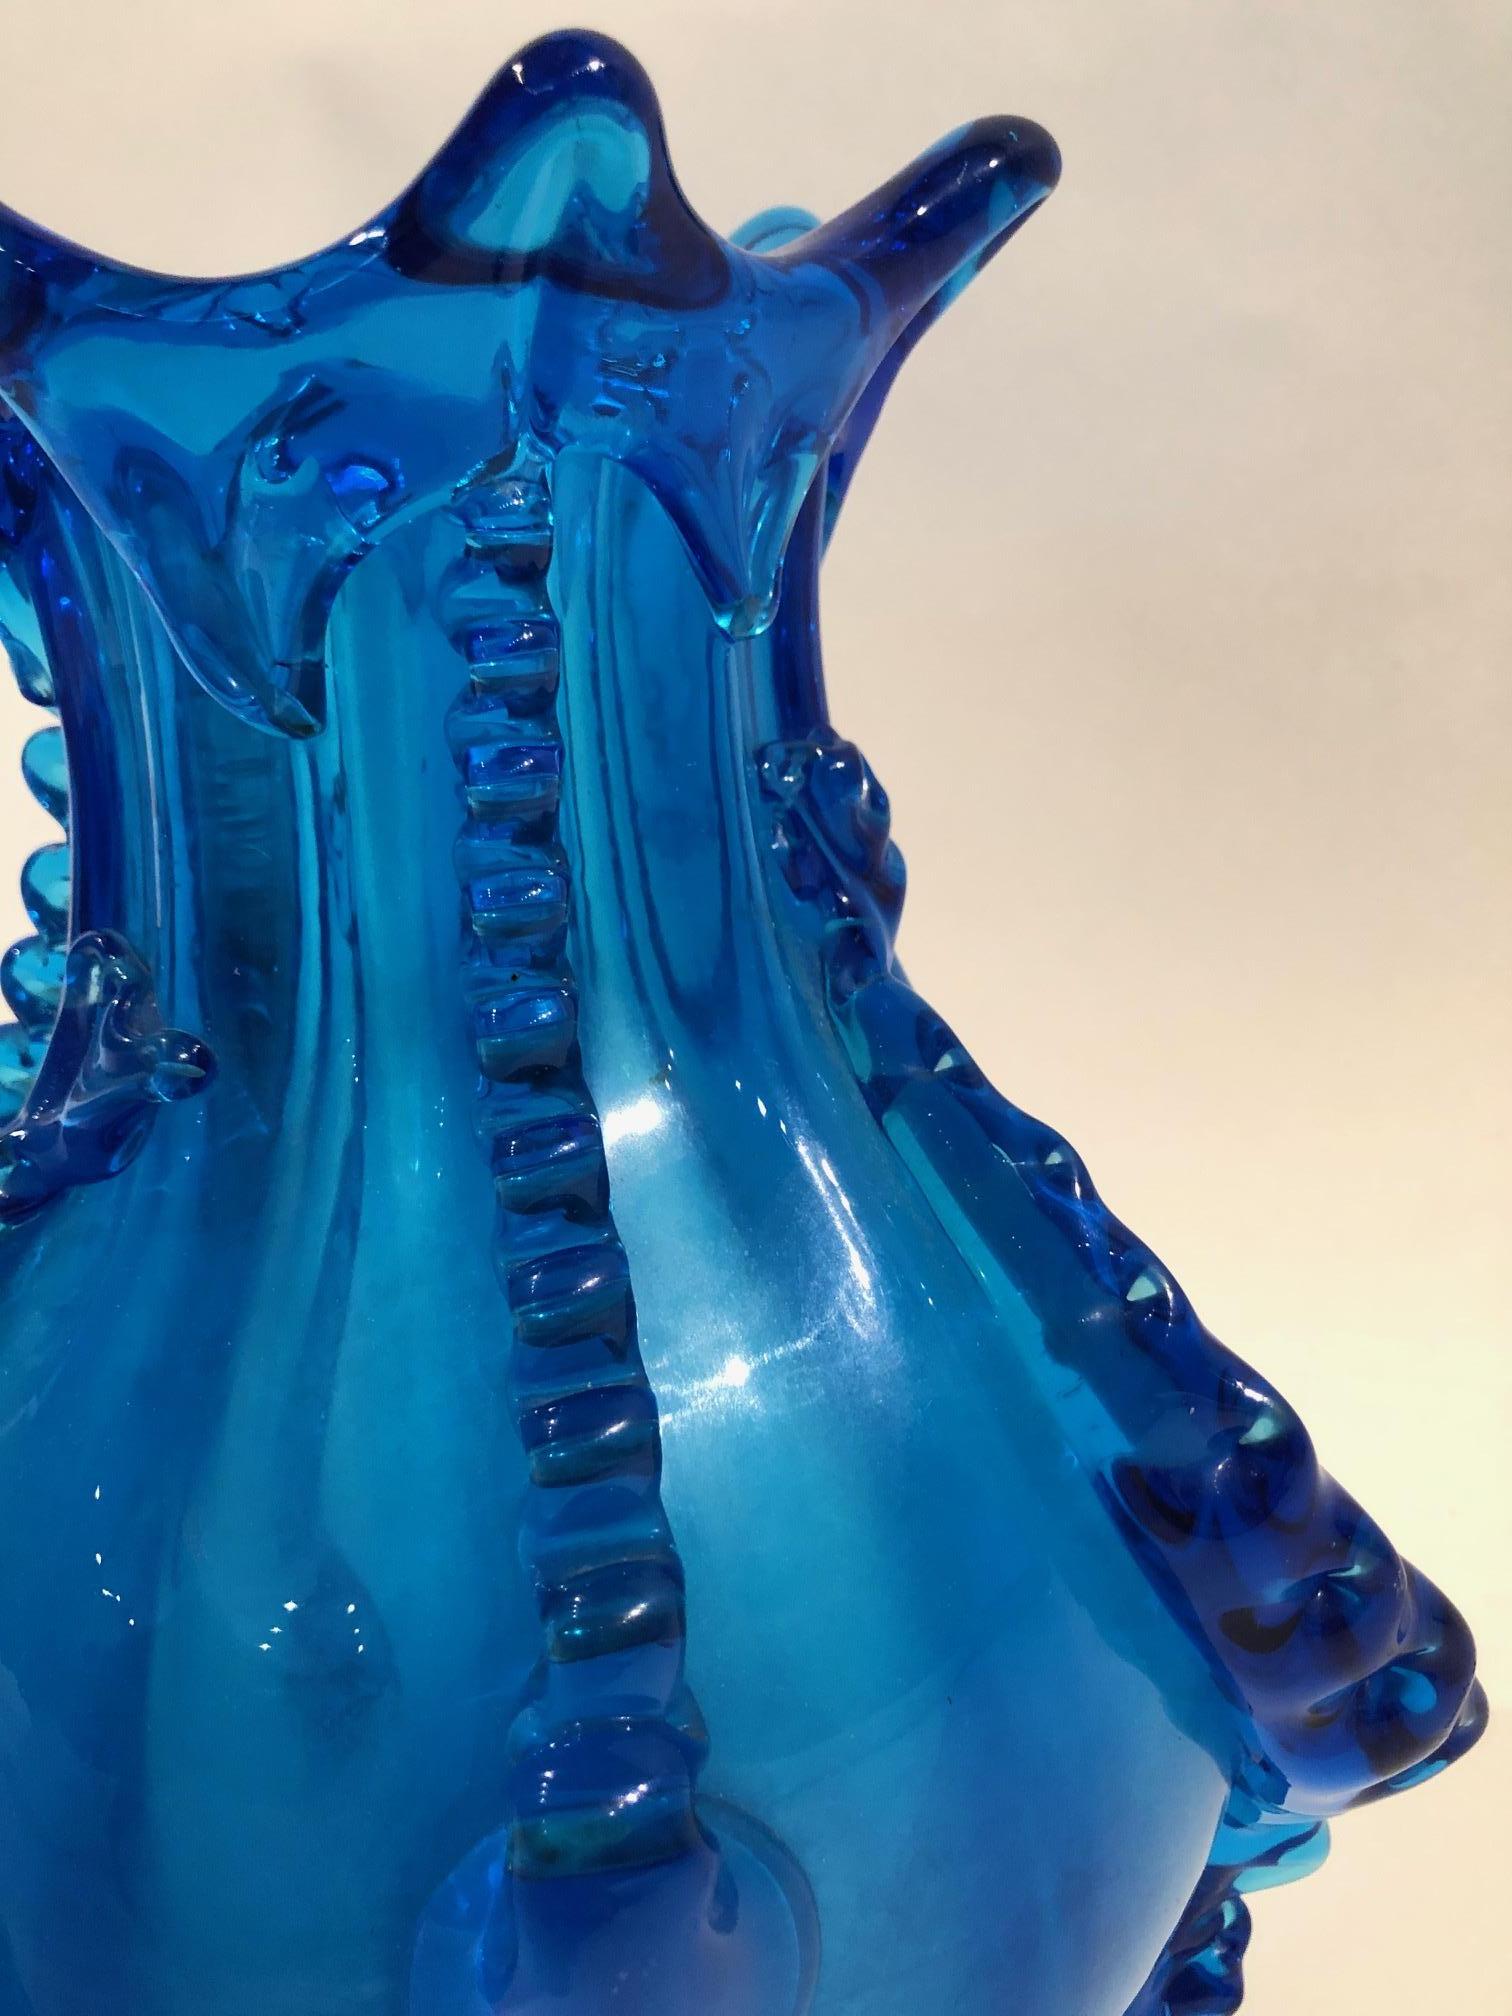 vase pate de verre bleu